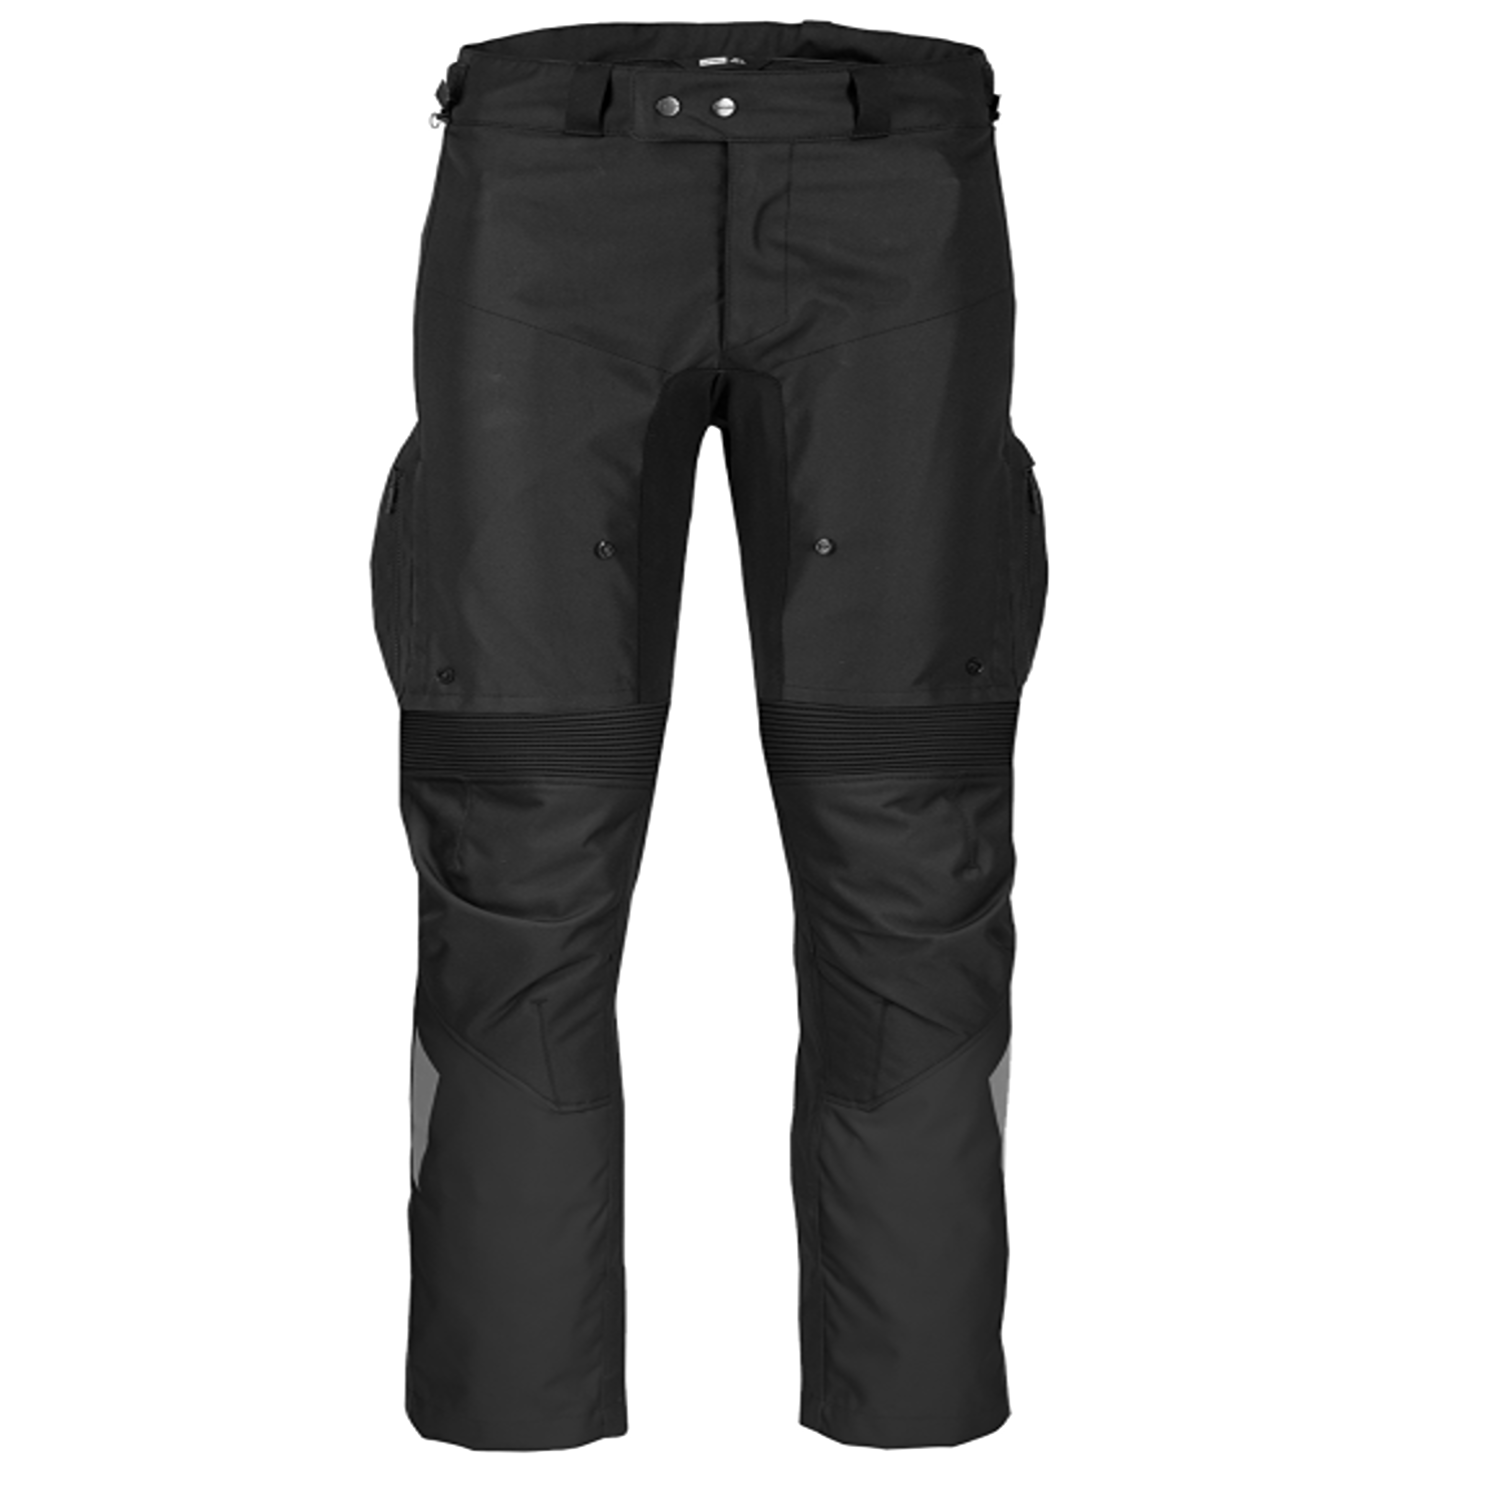 Image of Spidi Crossmaster Short Pants Black Size 5XL ID 8030161463873